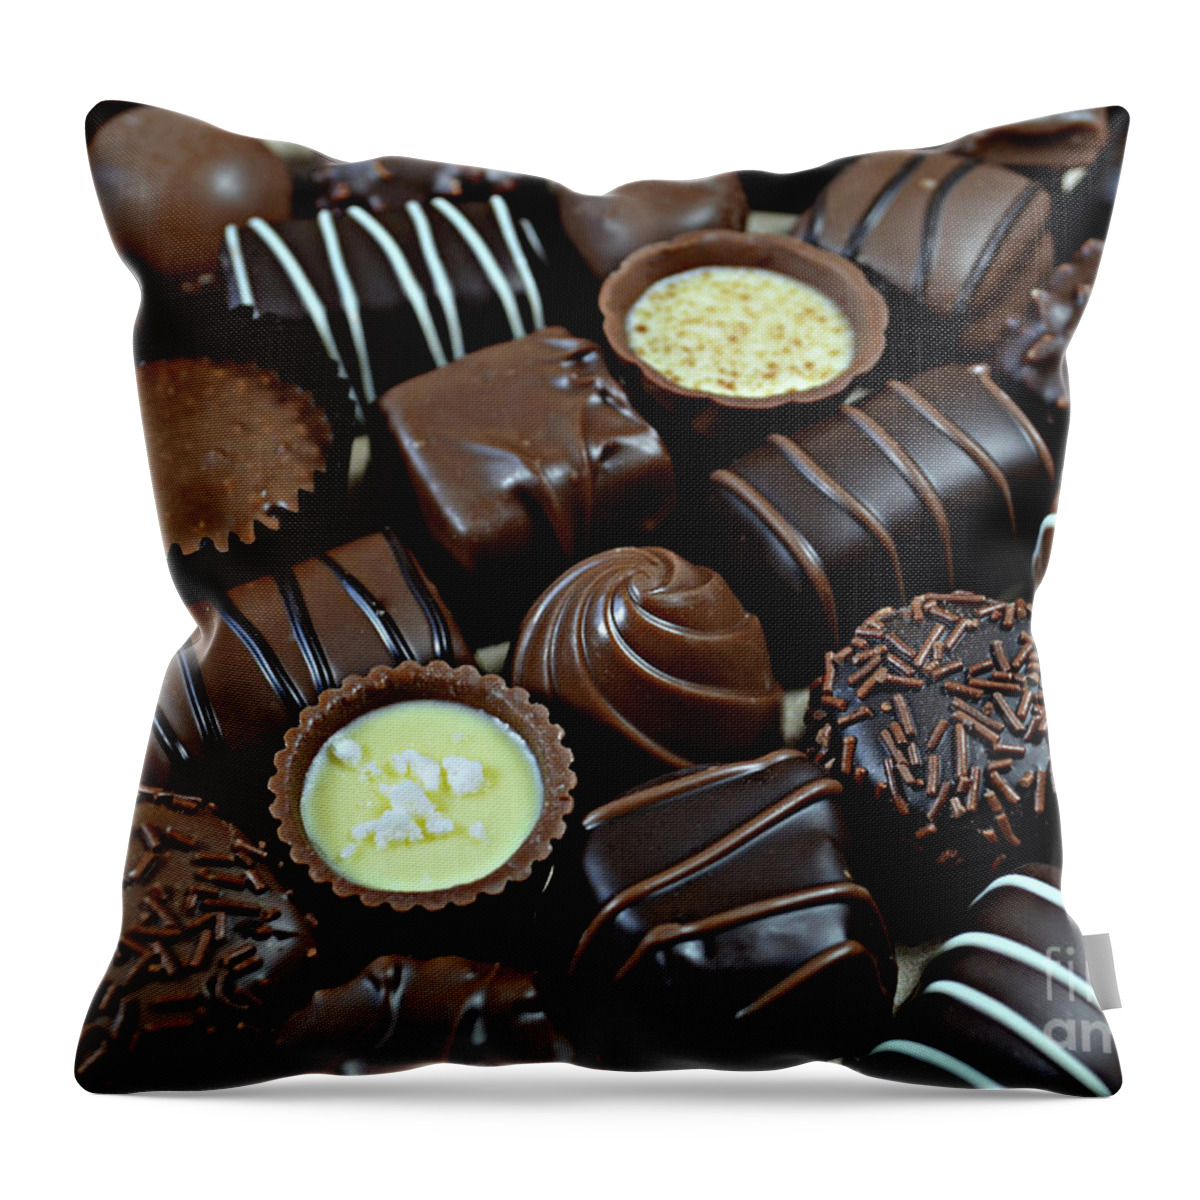 Chocolate Throw Pillow featuring the photograph Chocolates by Vivian Krug Cotton